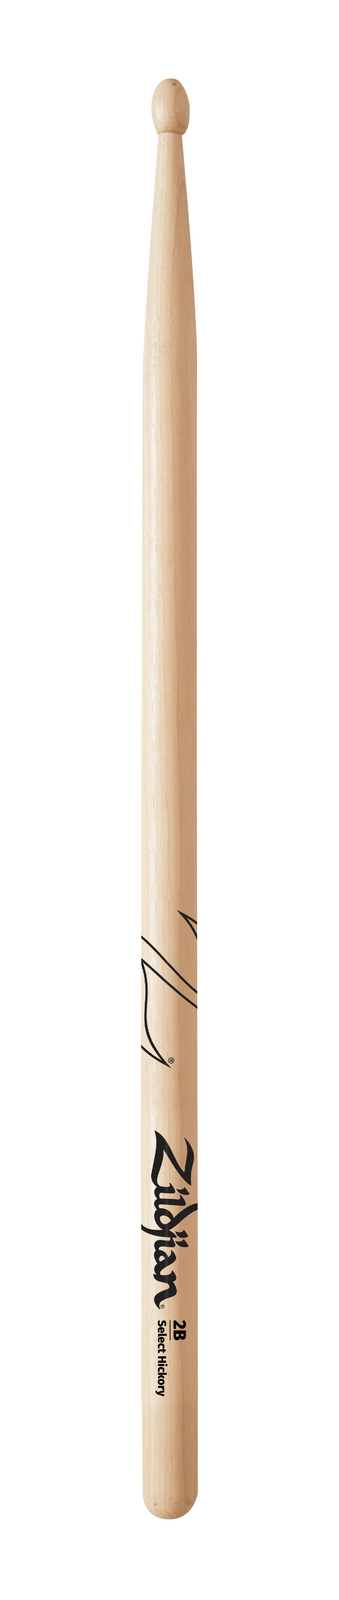 Zildjian 2B Wood Tip Drum Sticks